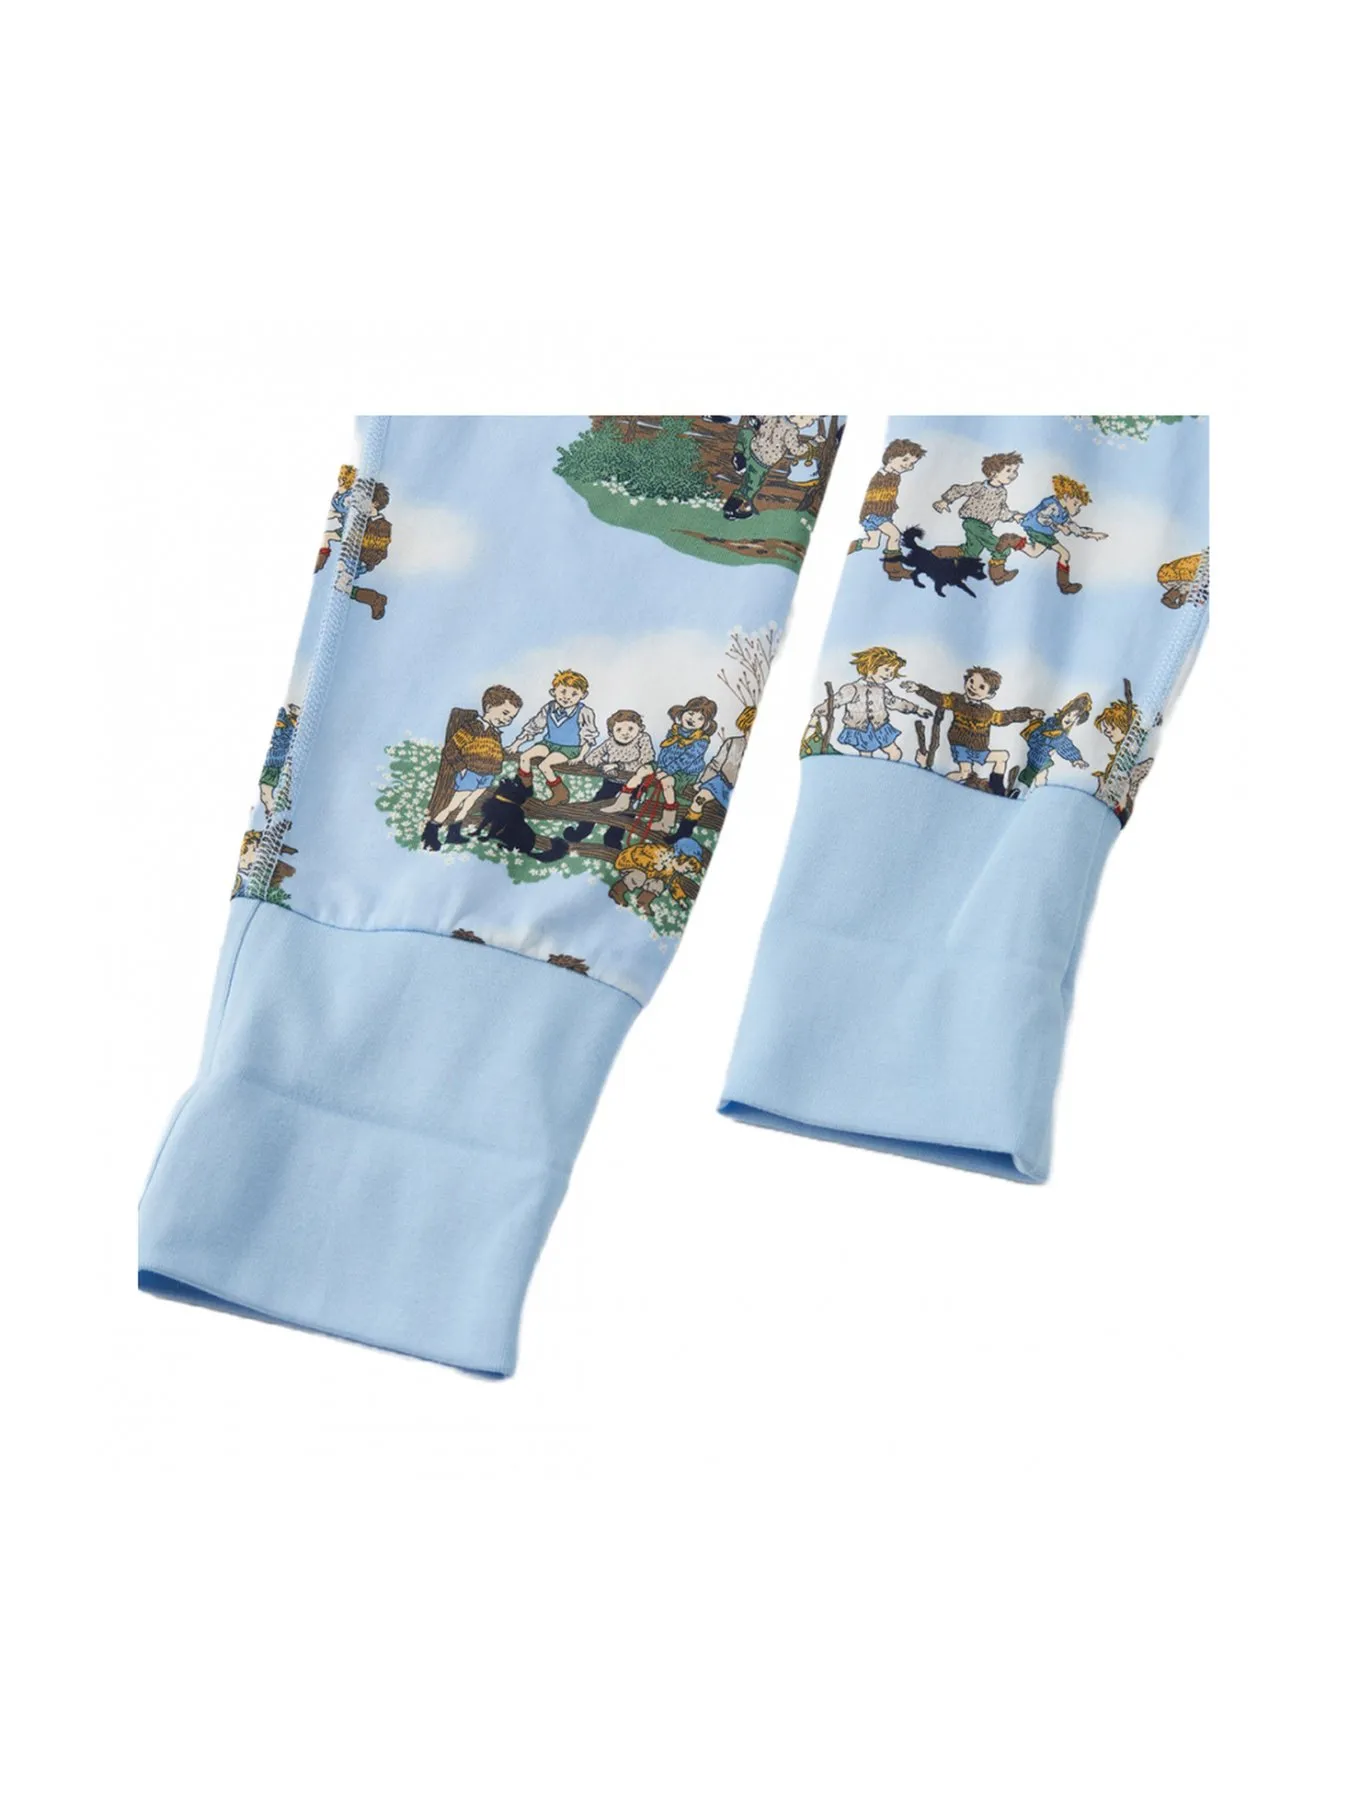 Pyjamas Barnen i Bullerbyn Tvådelad - Blå